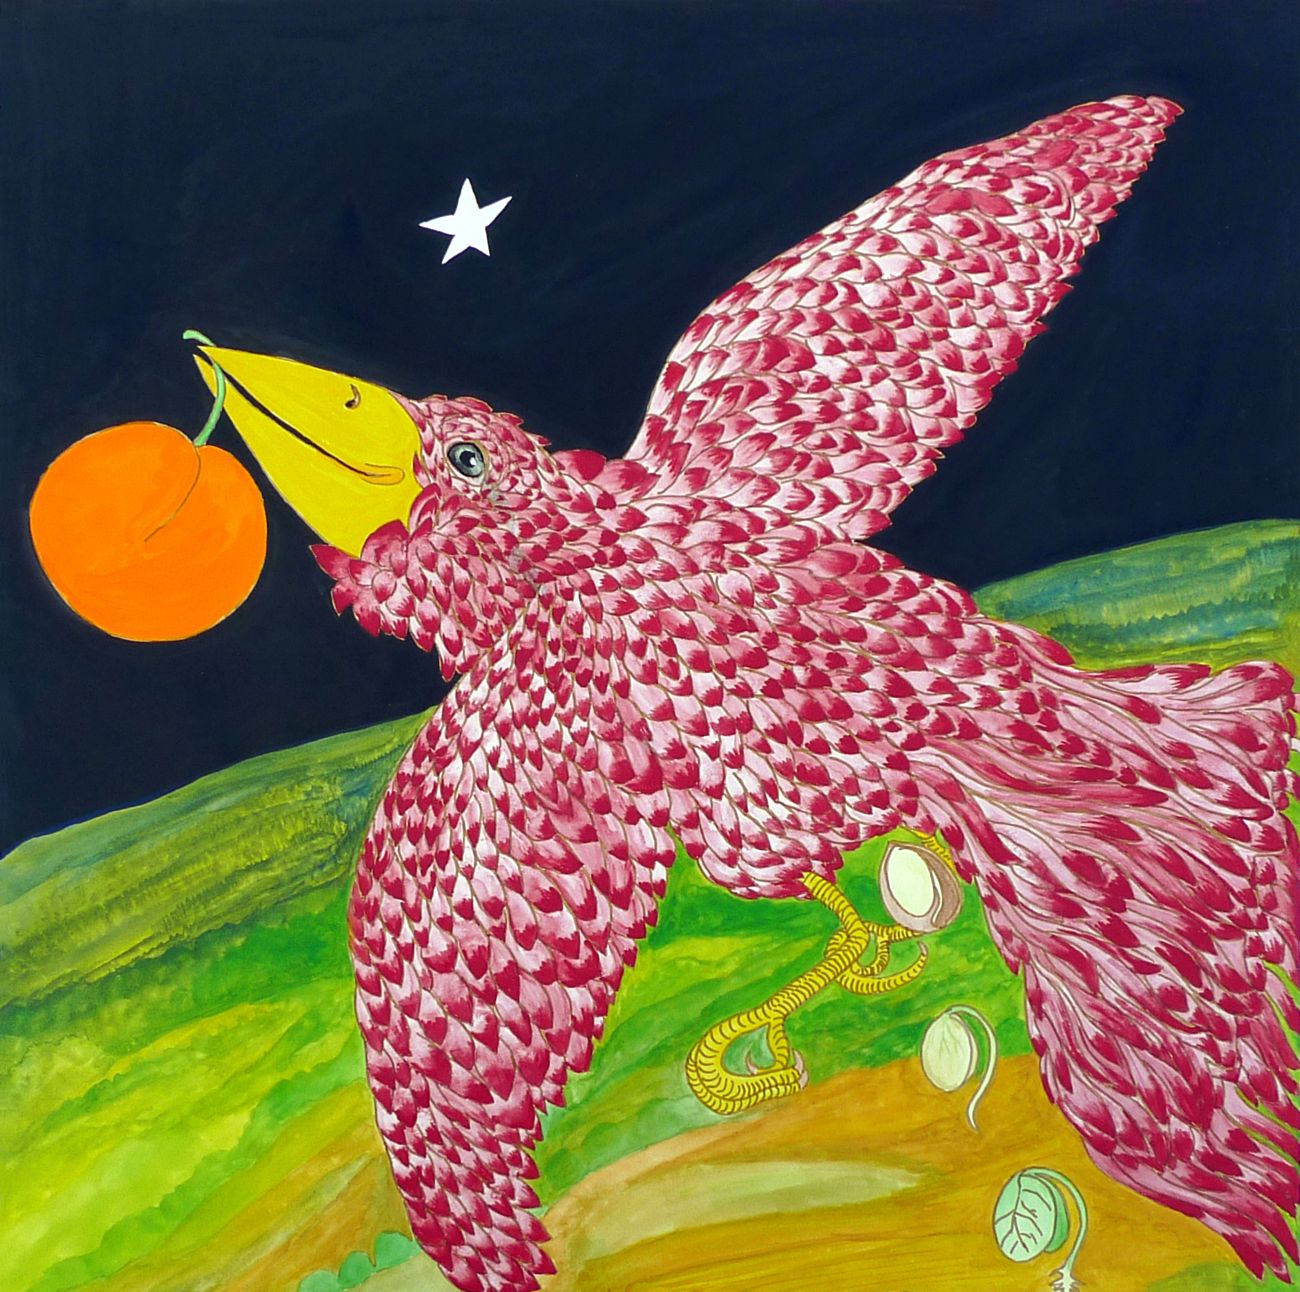 Jan Karpíšek: The Firebird, watercolor on paper, 50x50 cm, 2011